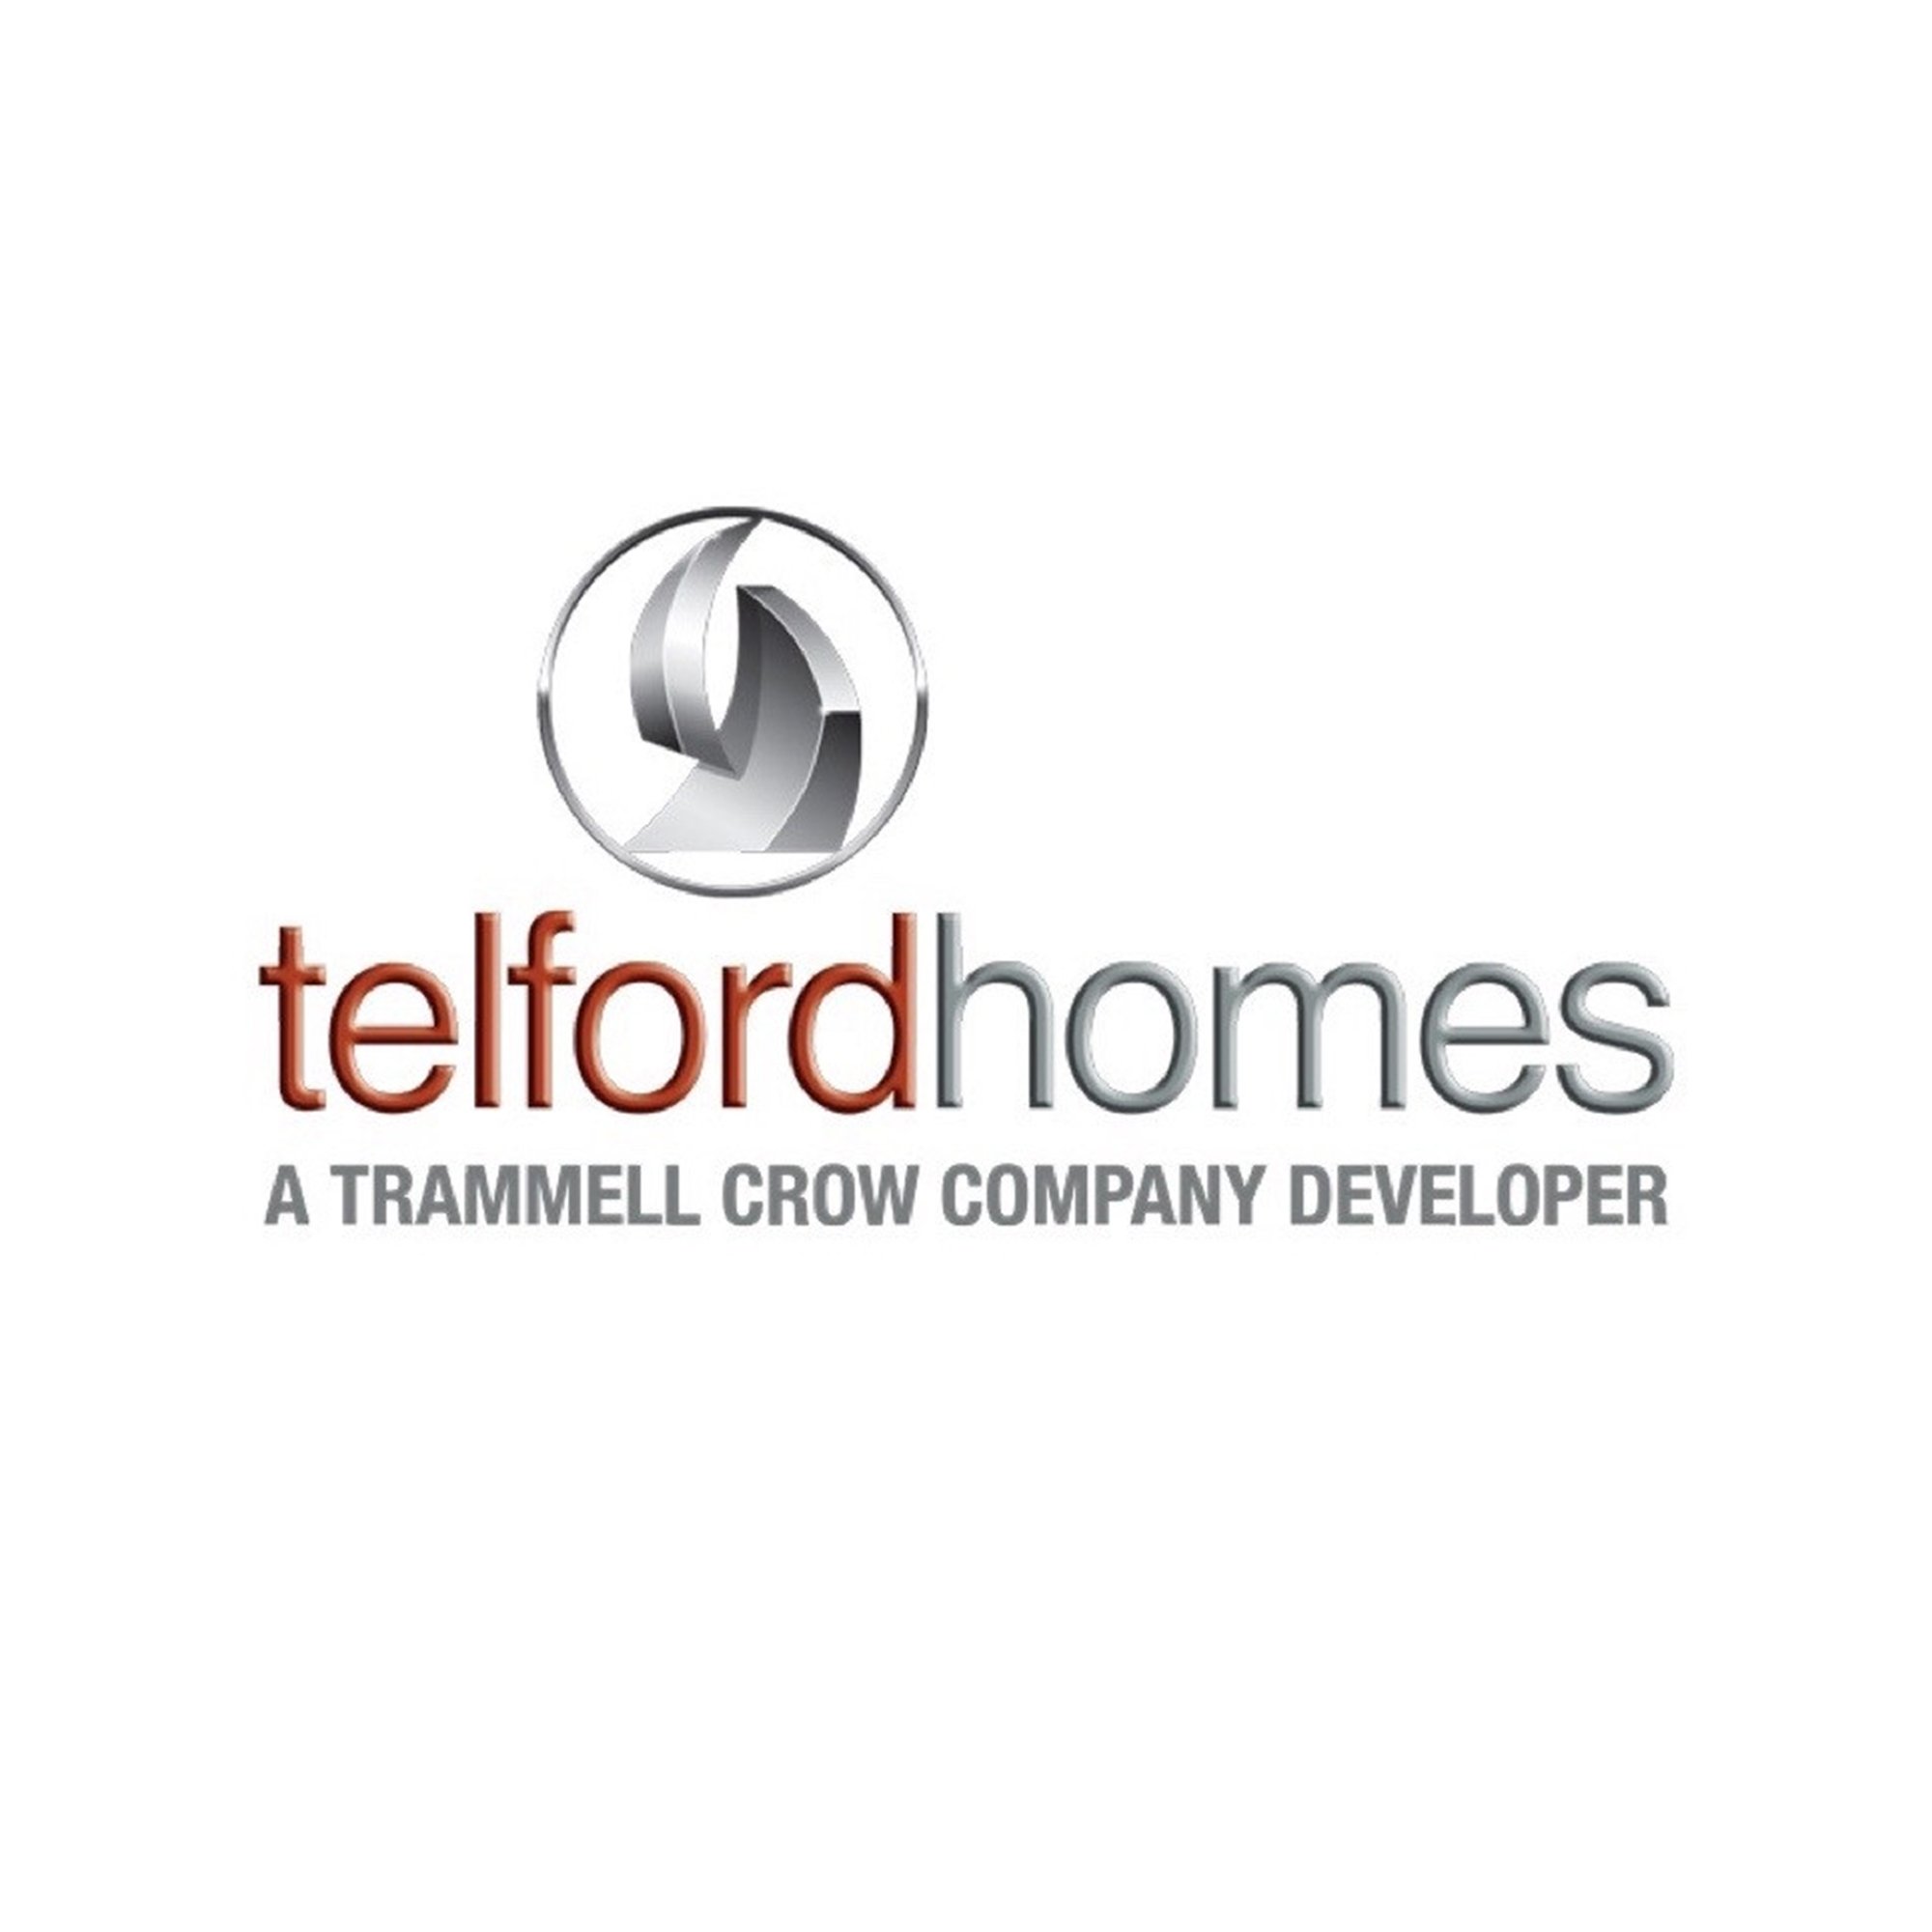 telford homes logo.jpg